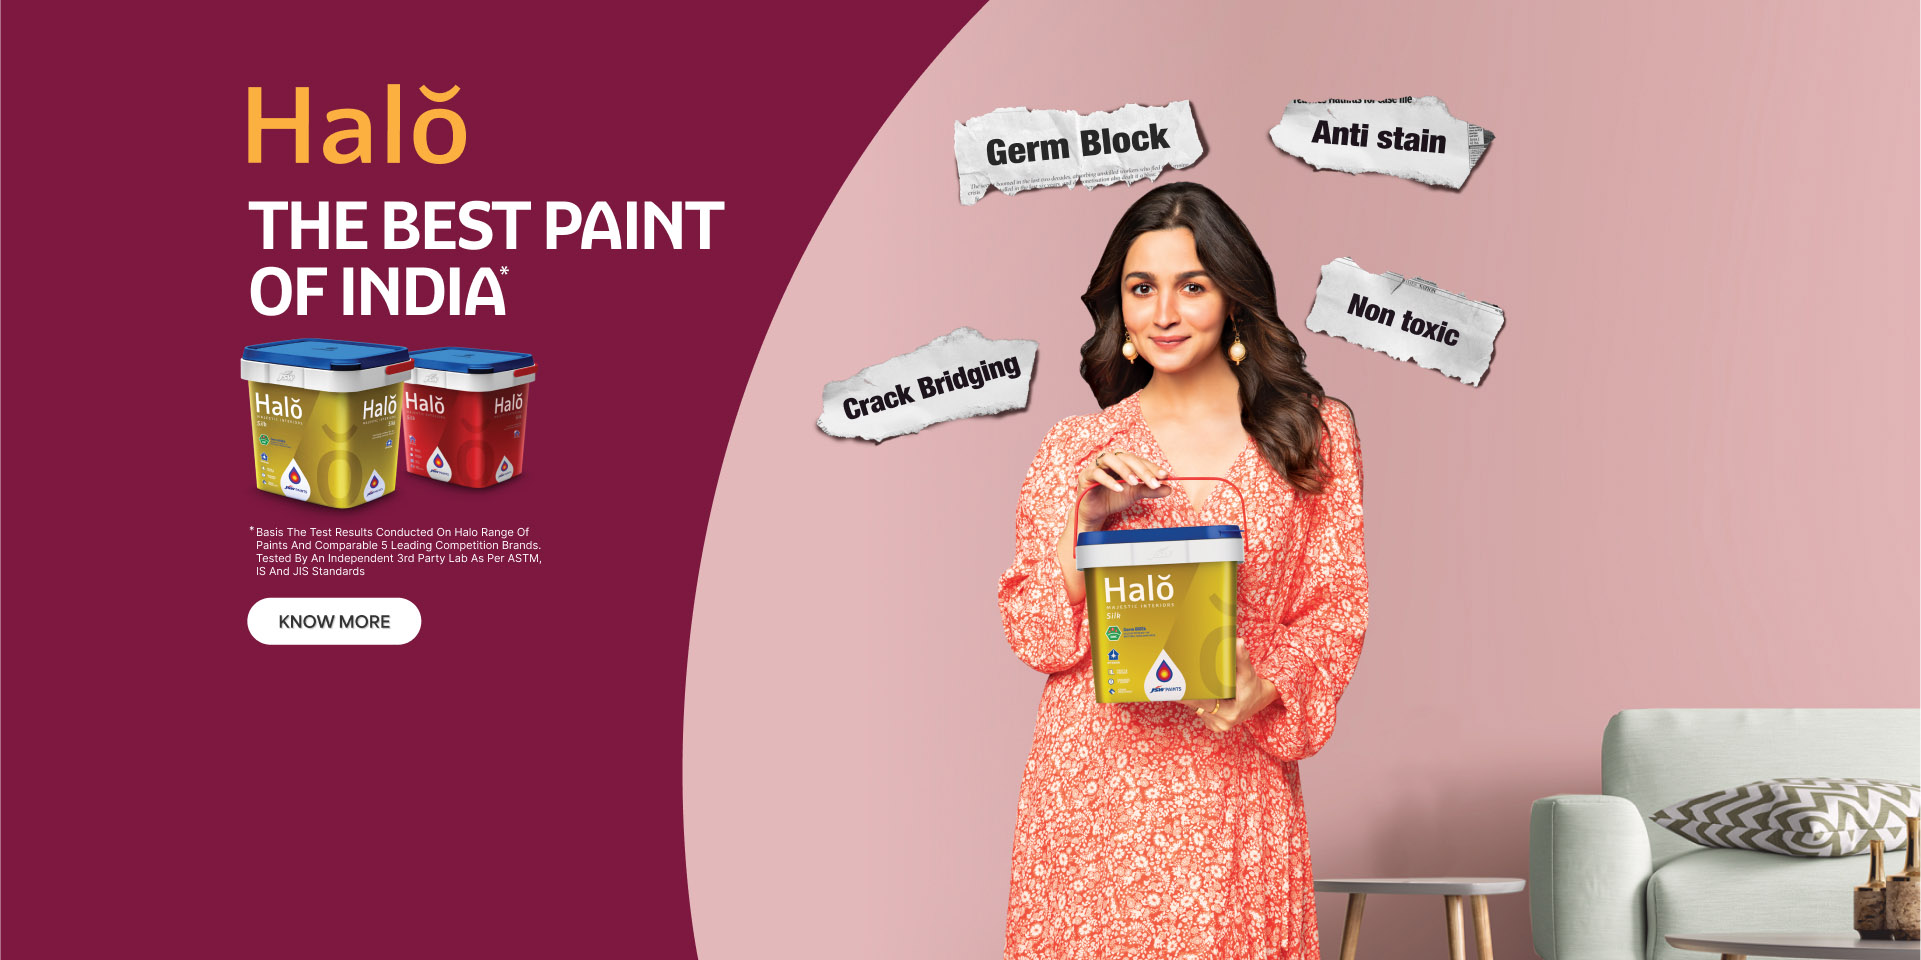 Alia Bhatt with JSW Halo - the Best Paint of India